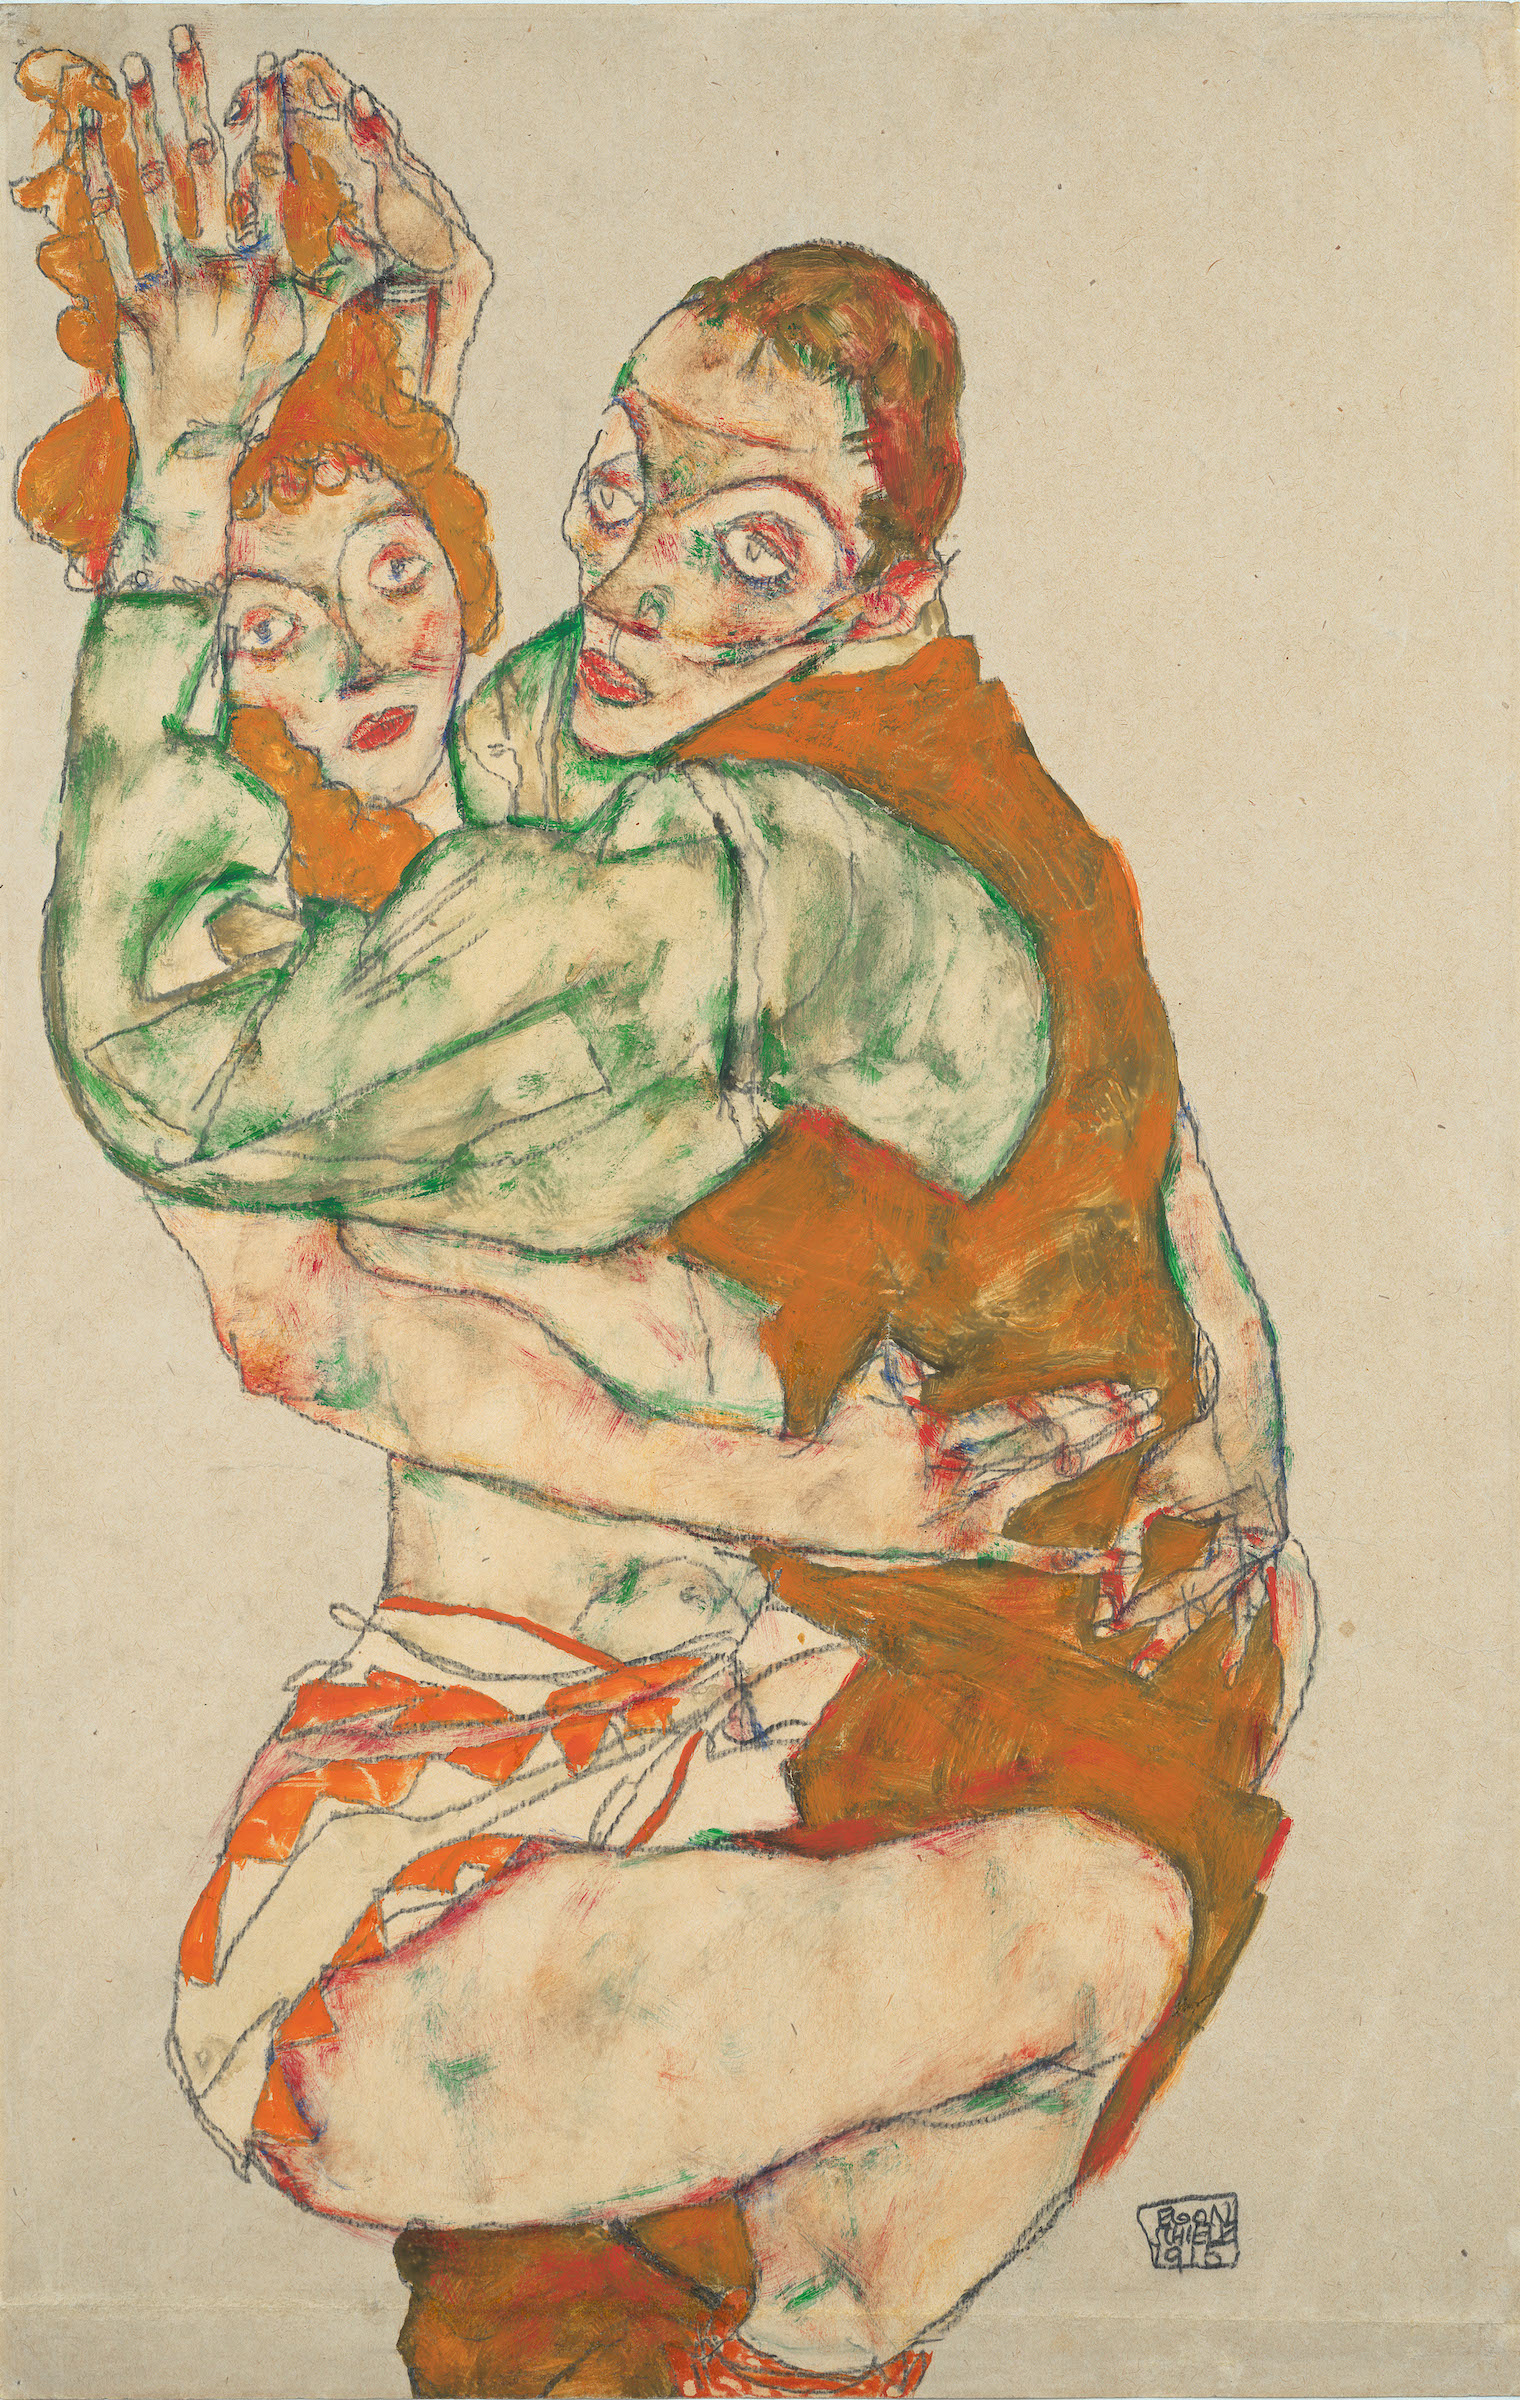 प्रणयक्रीड़ा करना by Egon Schiele - १९१५ - ३१.७ x ४९.६ सेमी 